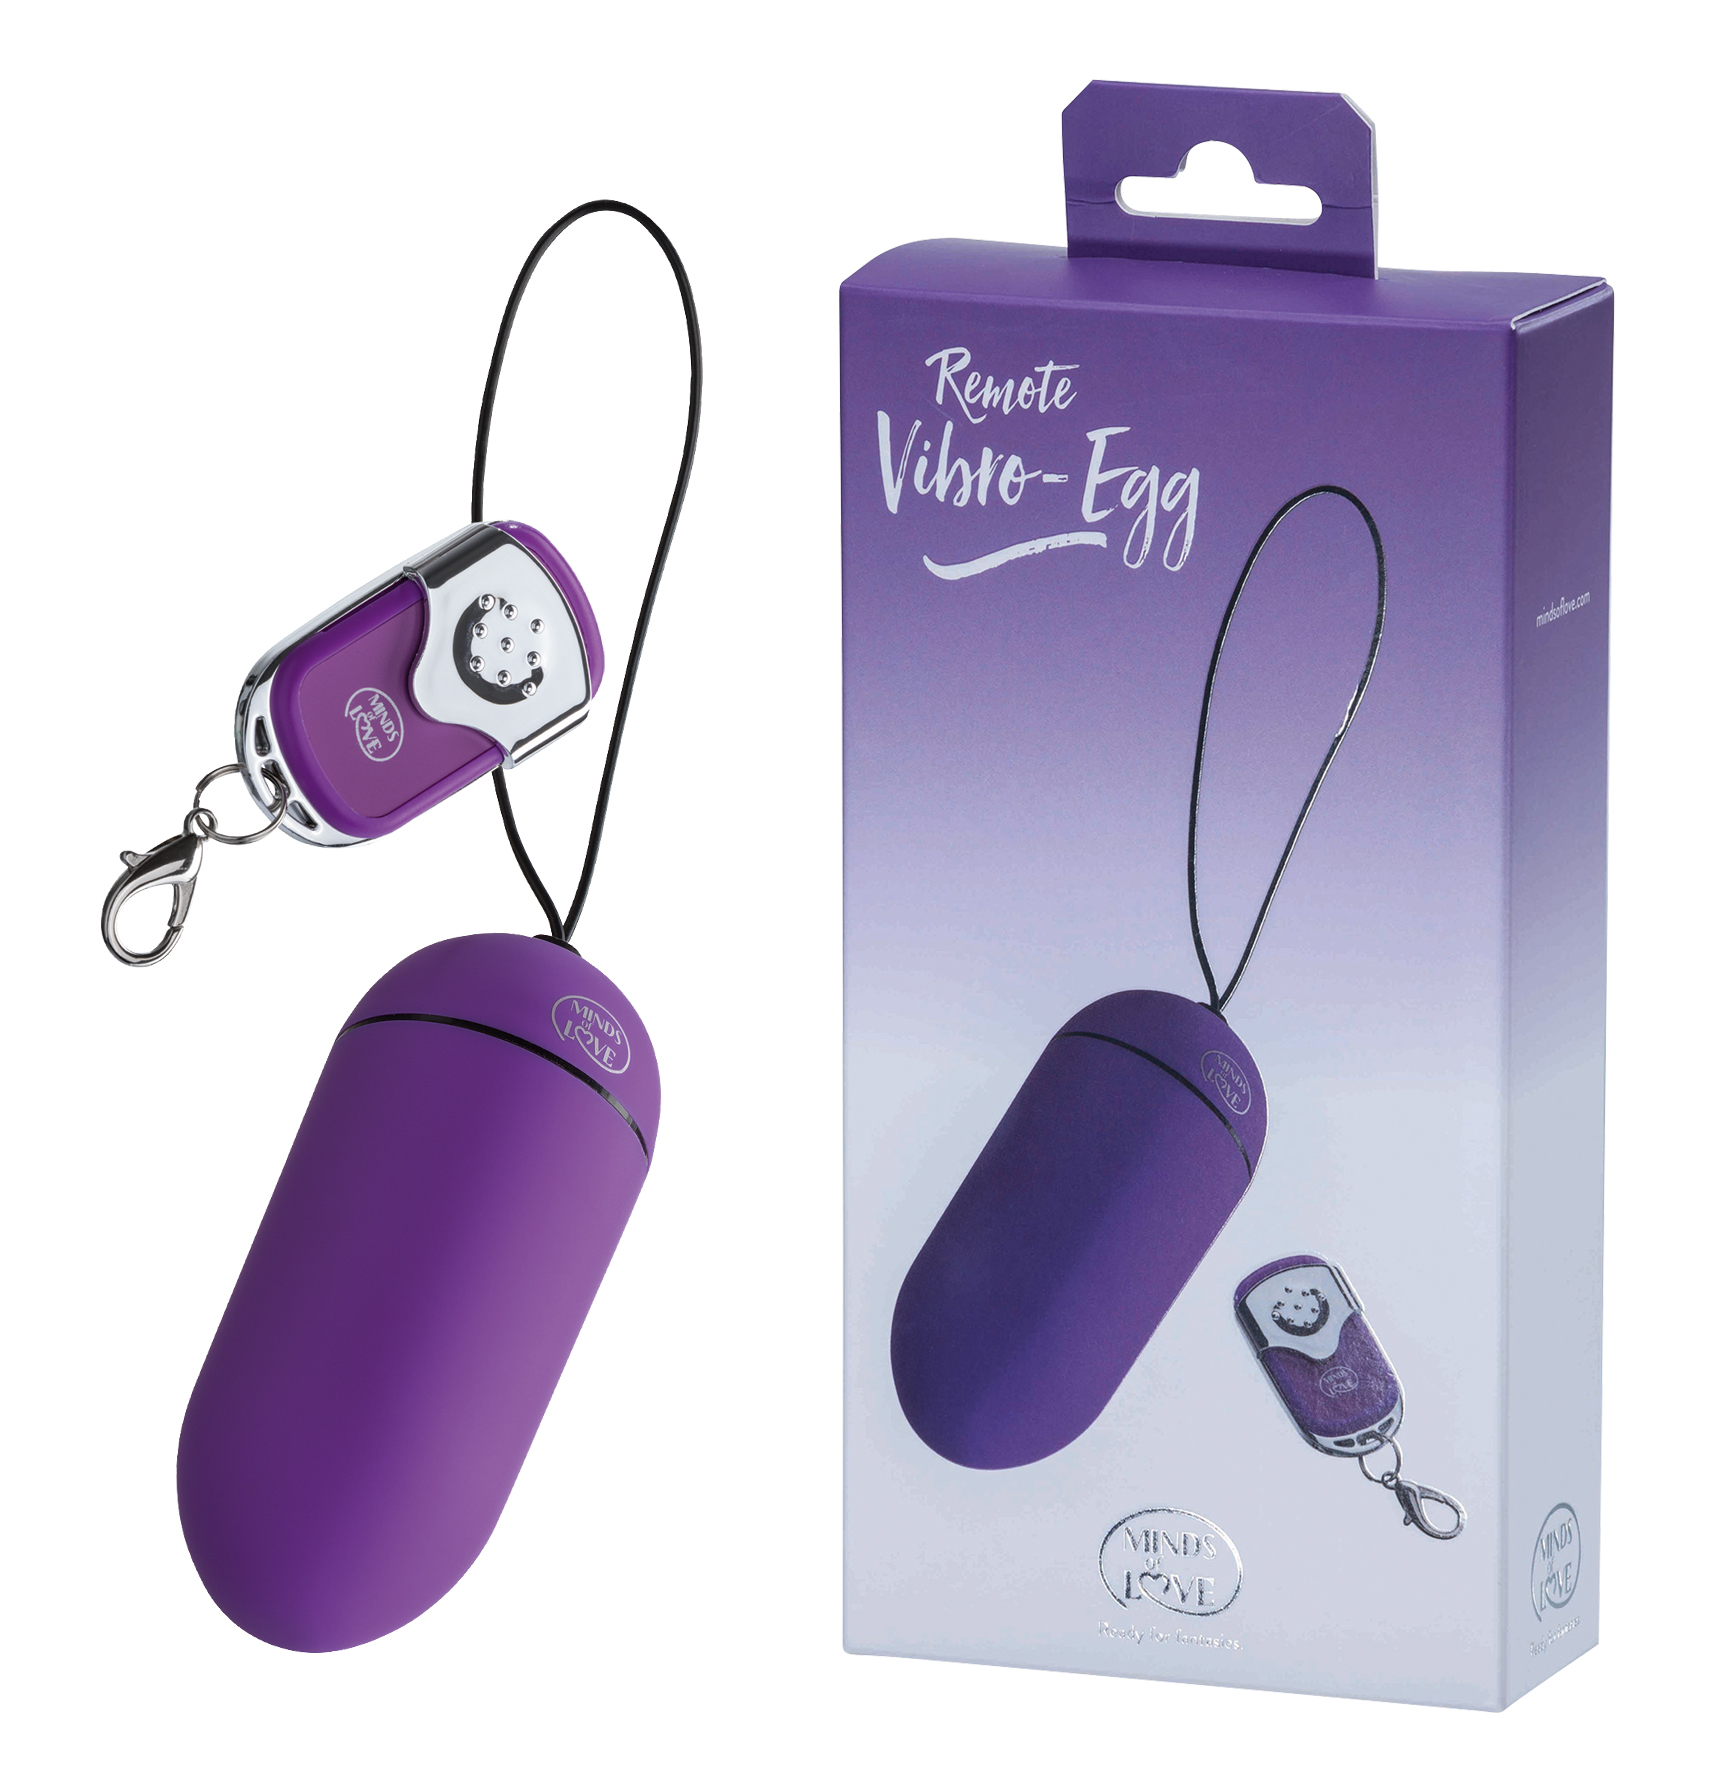 MINDS of LOVE Remote Vibro-Egg purple